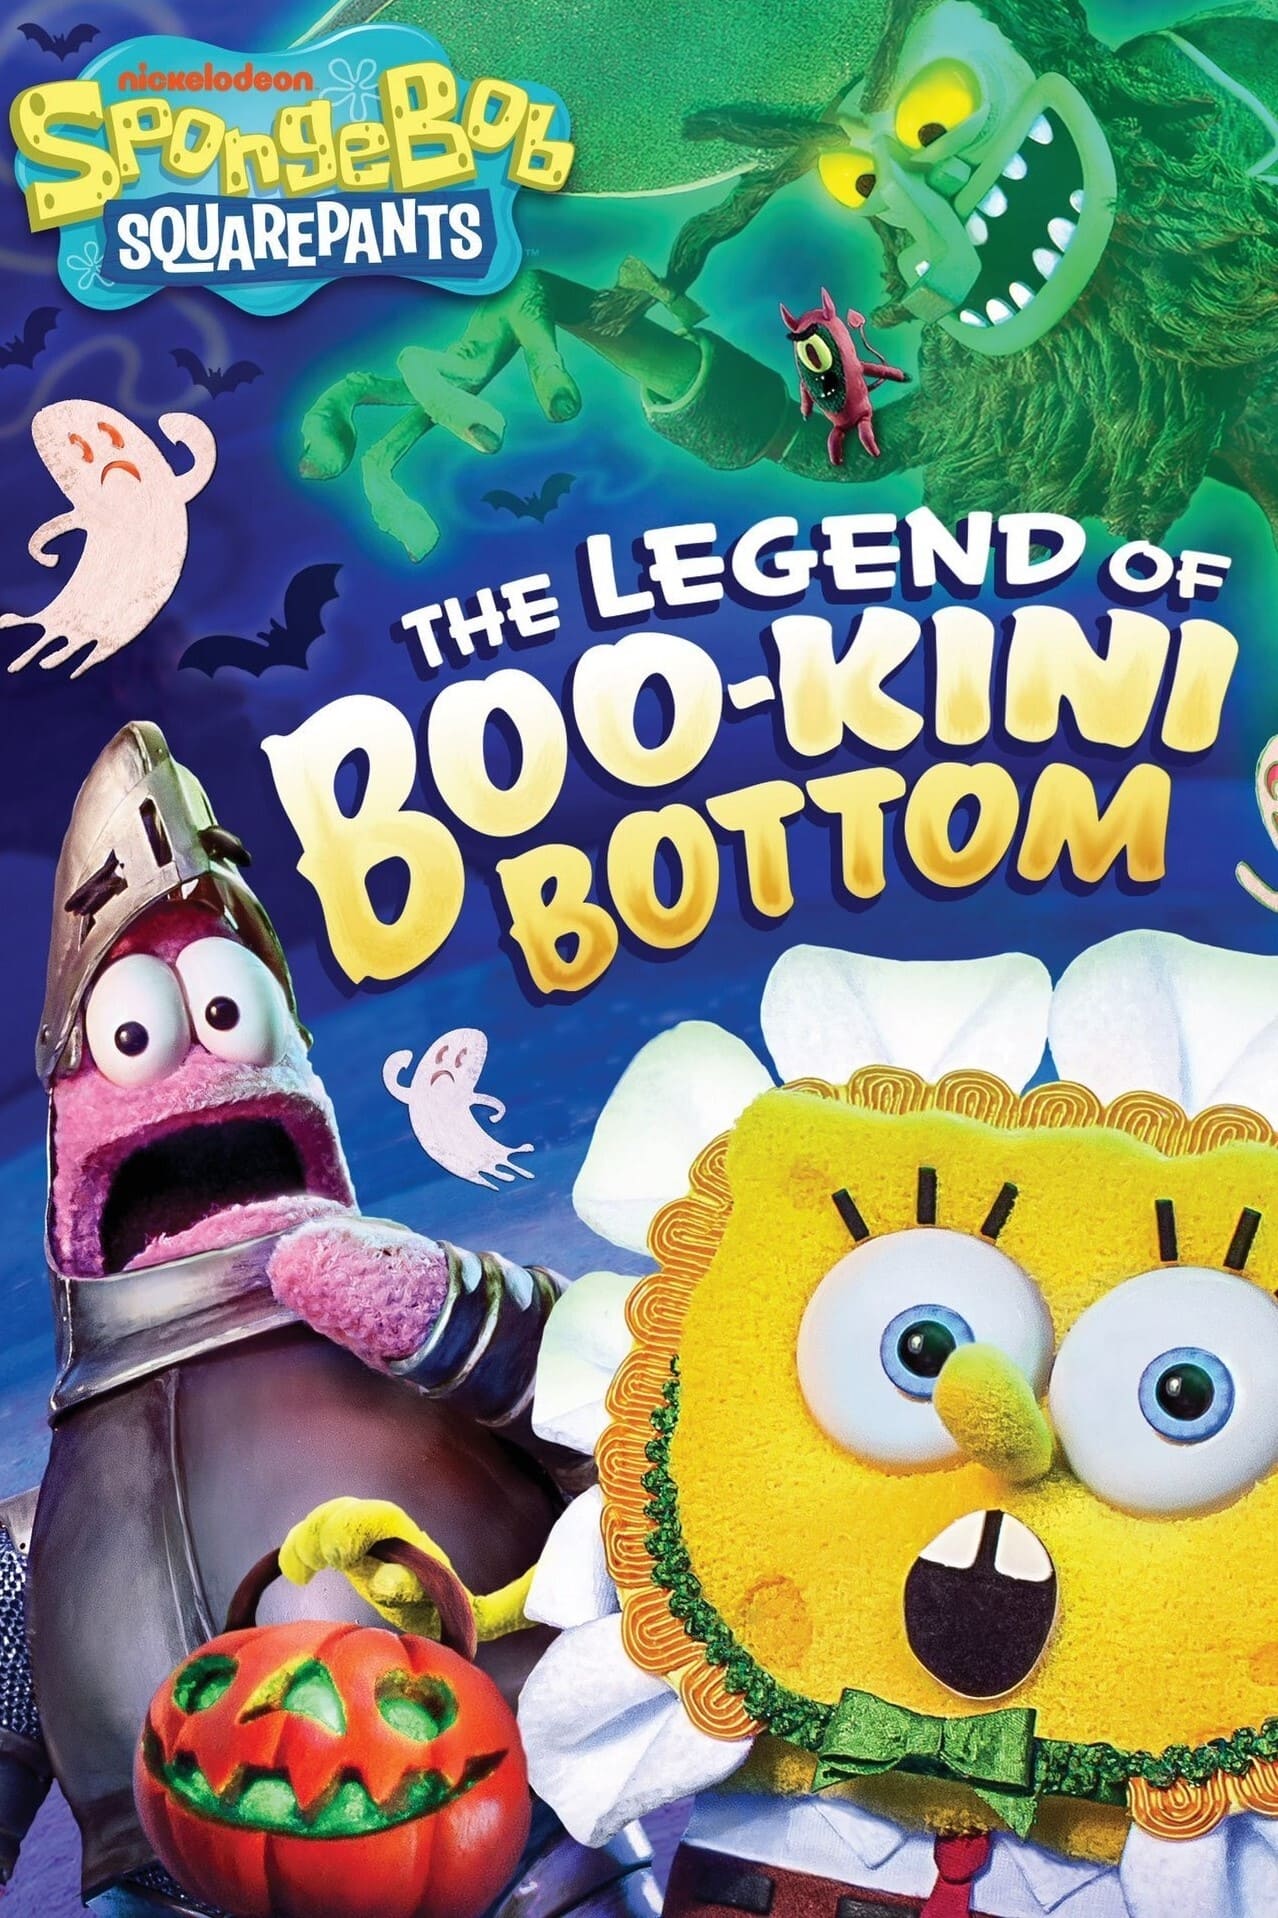 The Legend of Boo-Kini Bottom (2017)